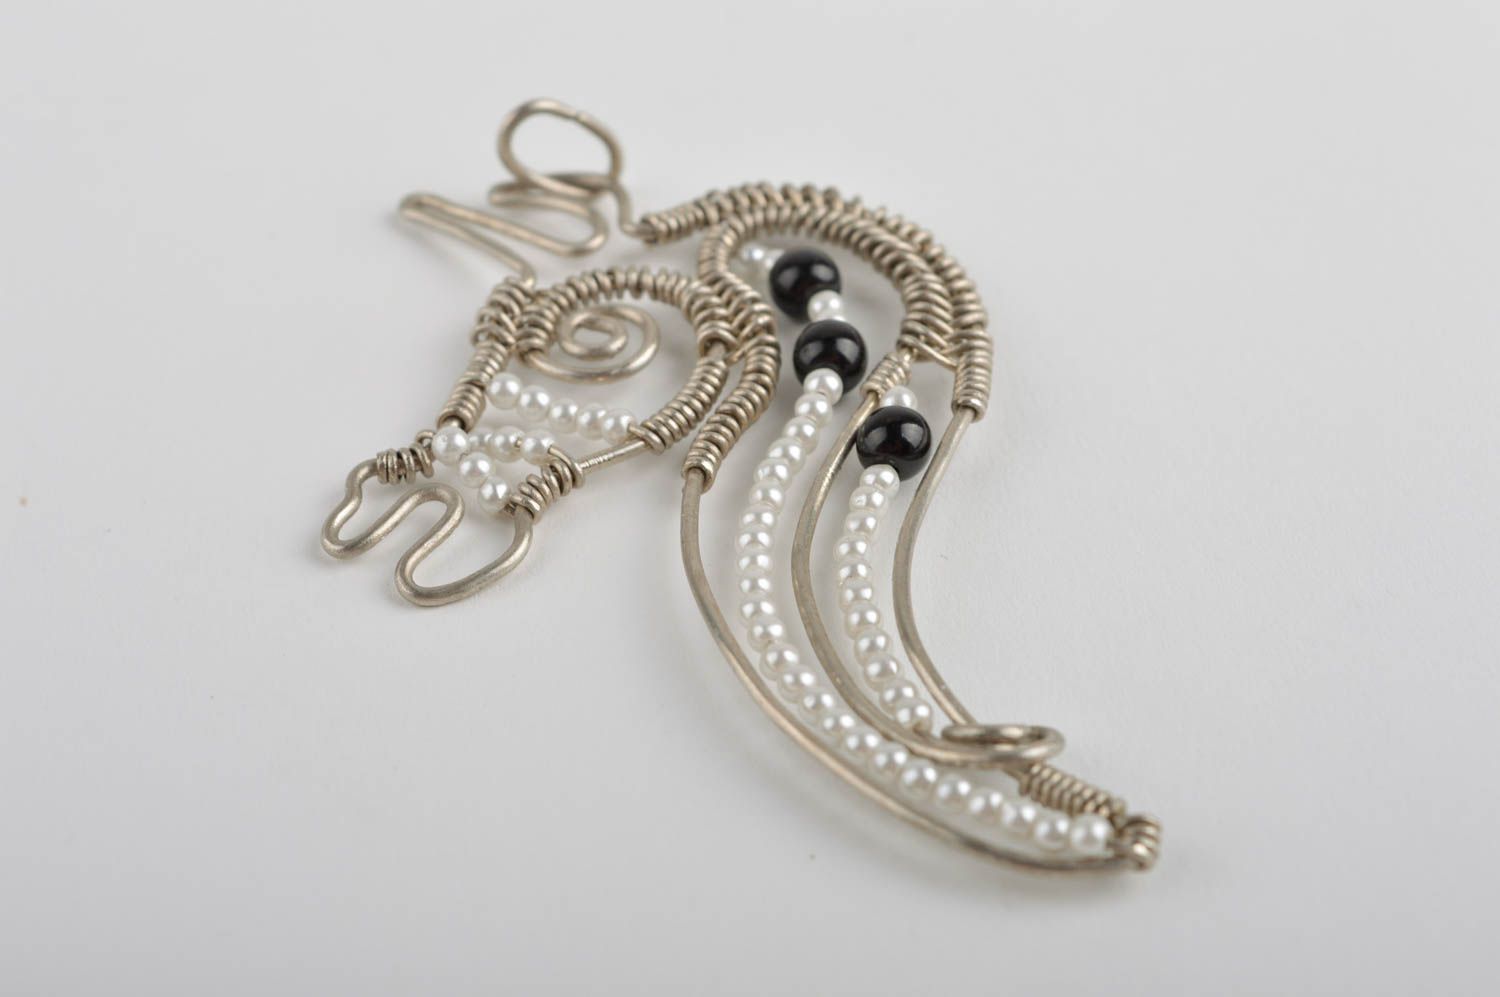 Gemstone necklace handmade jewelry designer accessories pendant necklace photo 4